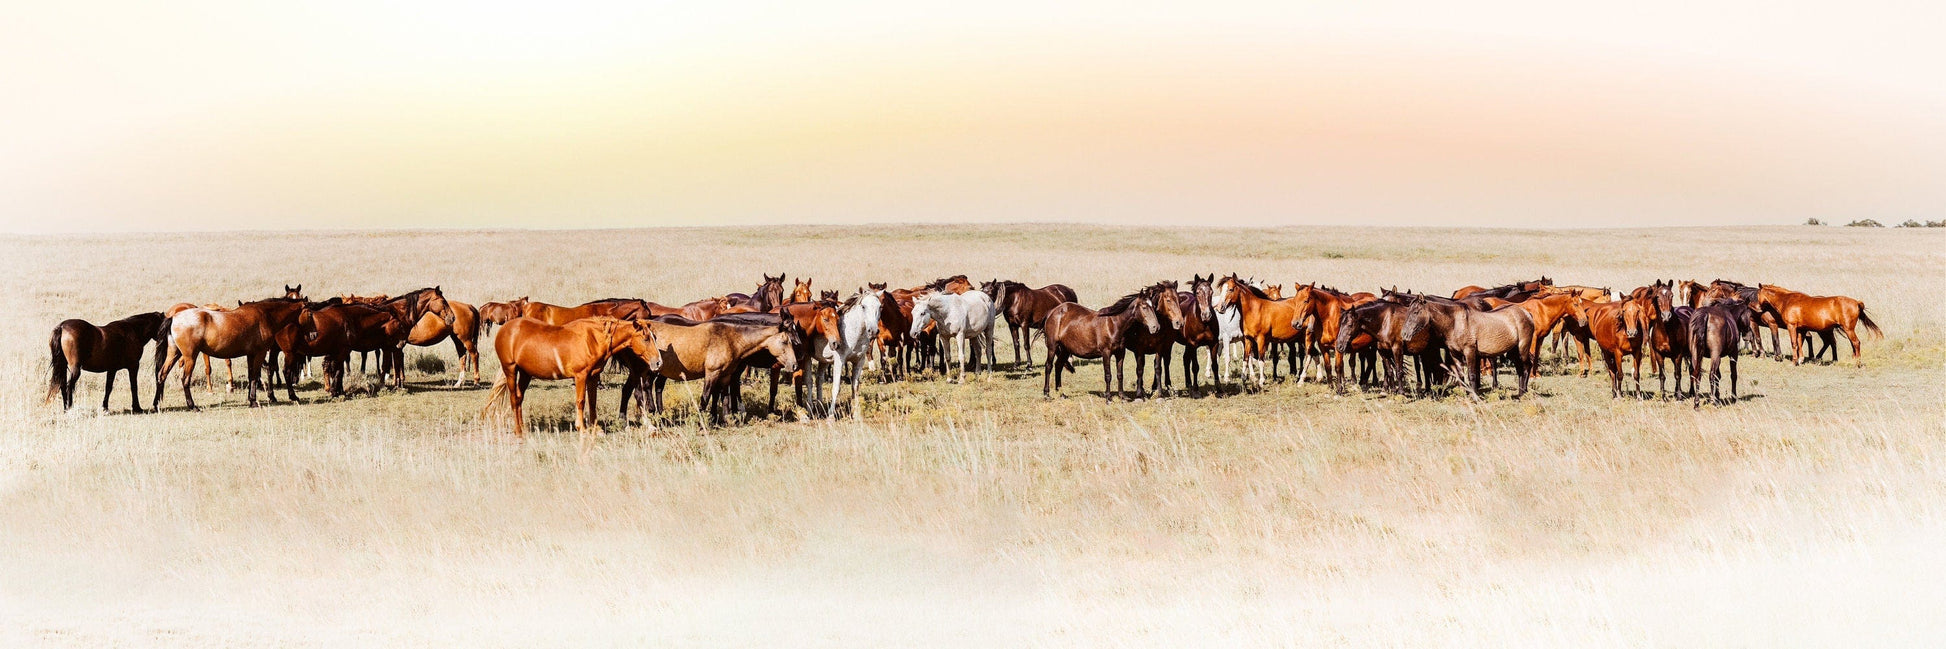 Teri James Photography Wall Art Paper Photo Print / 12 x 36 Inches Large Panoramic Horse Art - Oklahoma Wild Horses